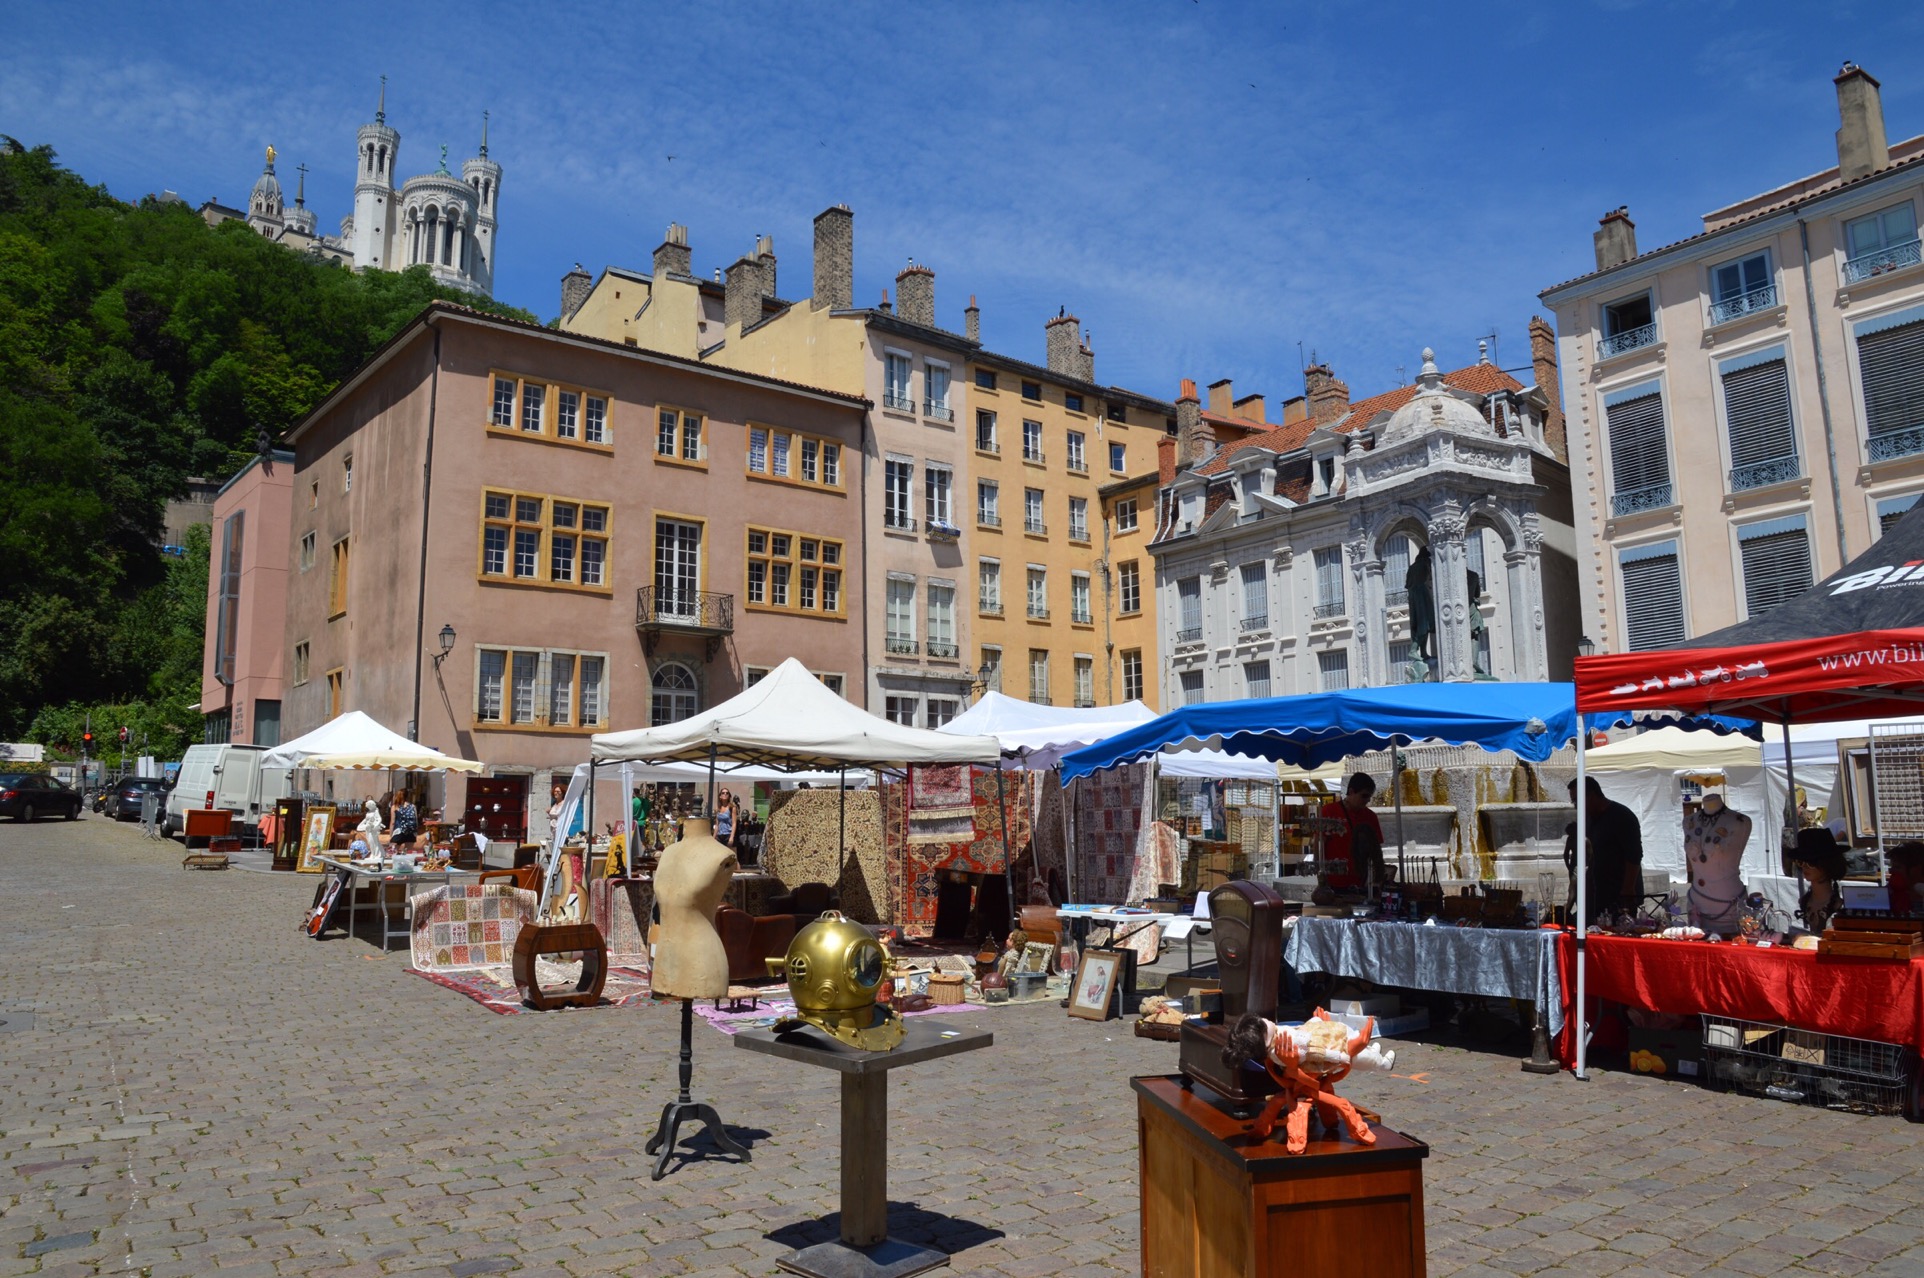 Flea market, Place Saint-Jean, Vieux-Lyon, Lyon, France